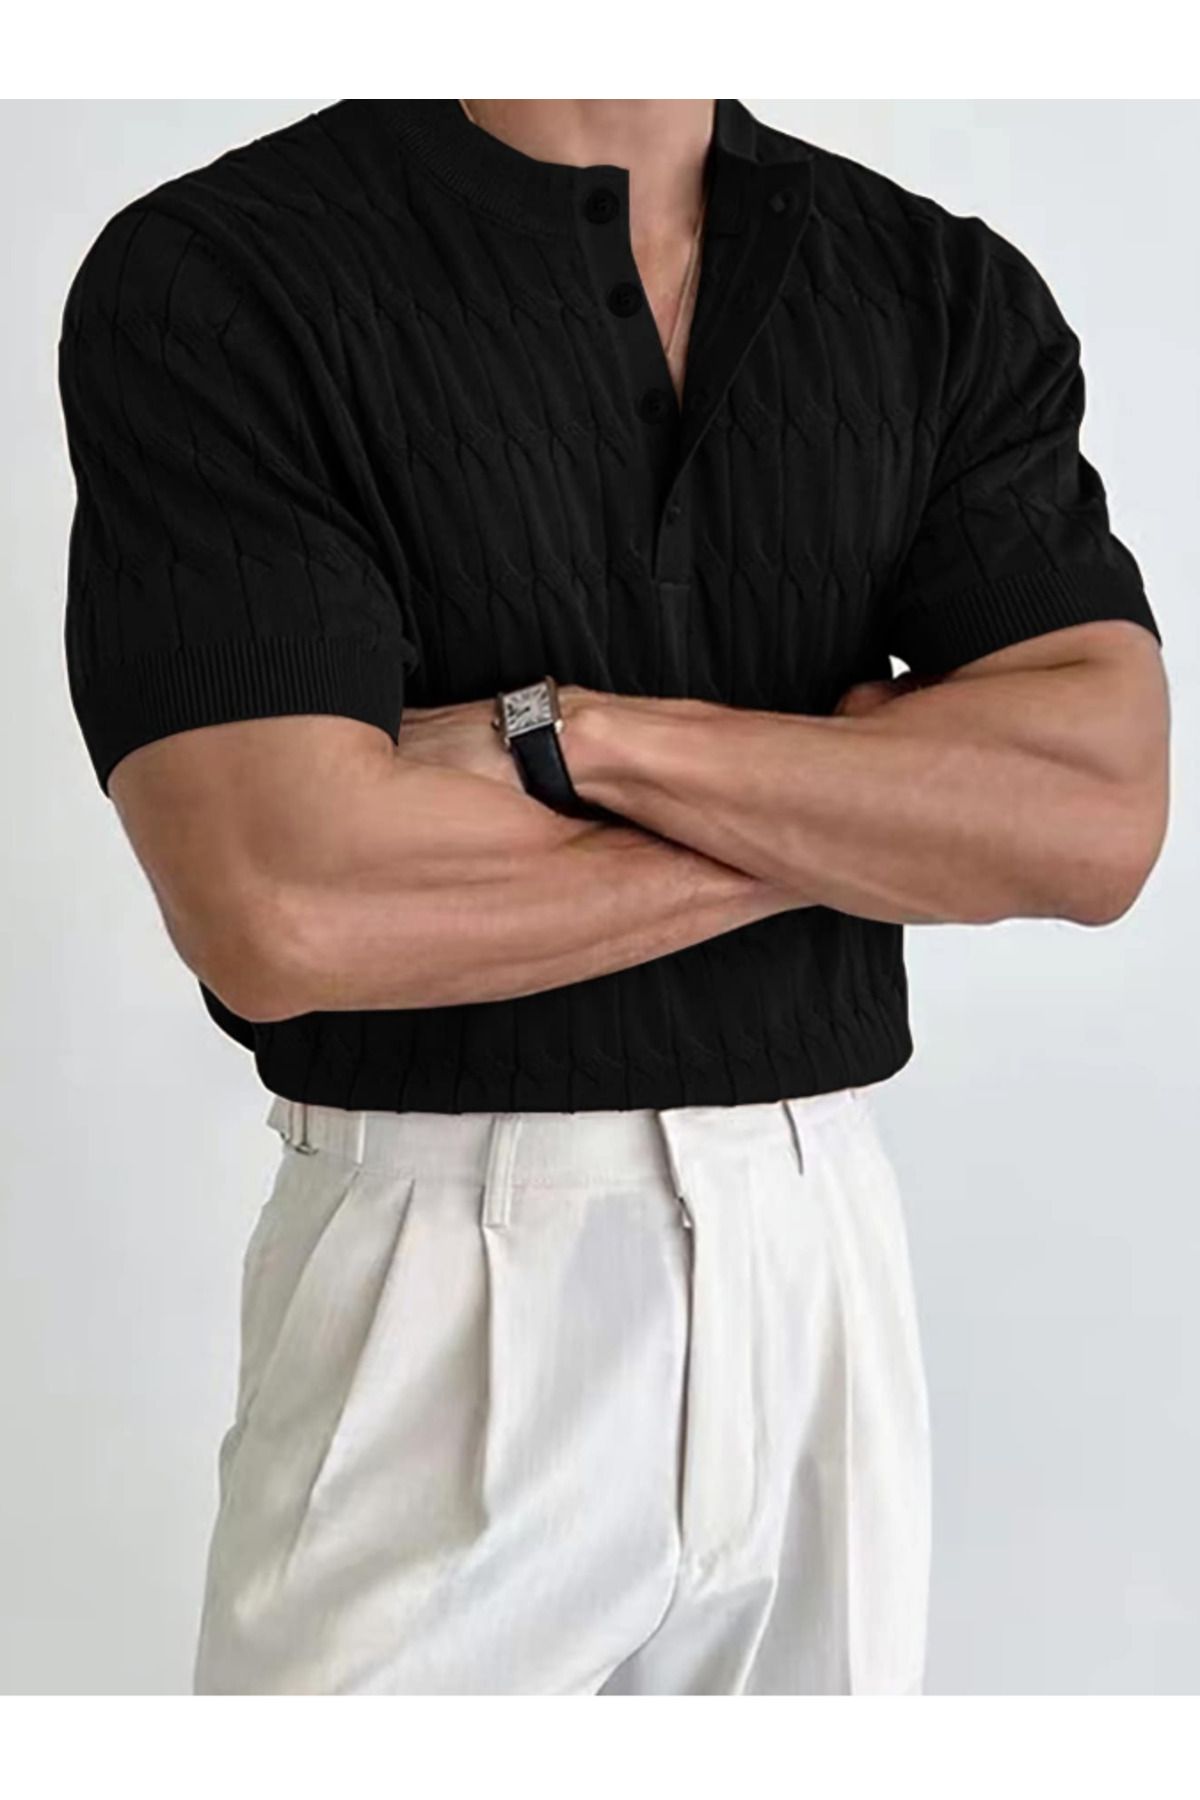 Tarz Cool Erkek Siyah 3 Düğmeli Hakim Yaka Triko T-Shirt